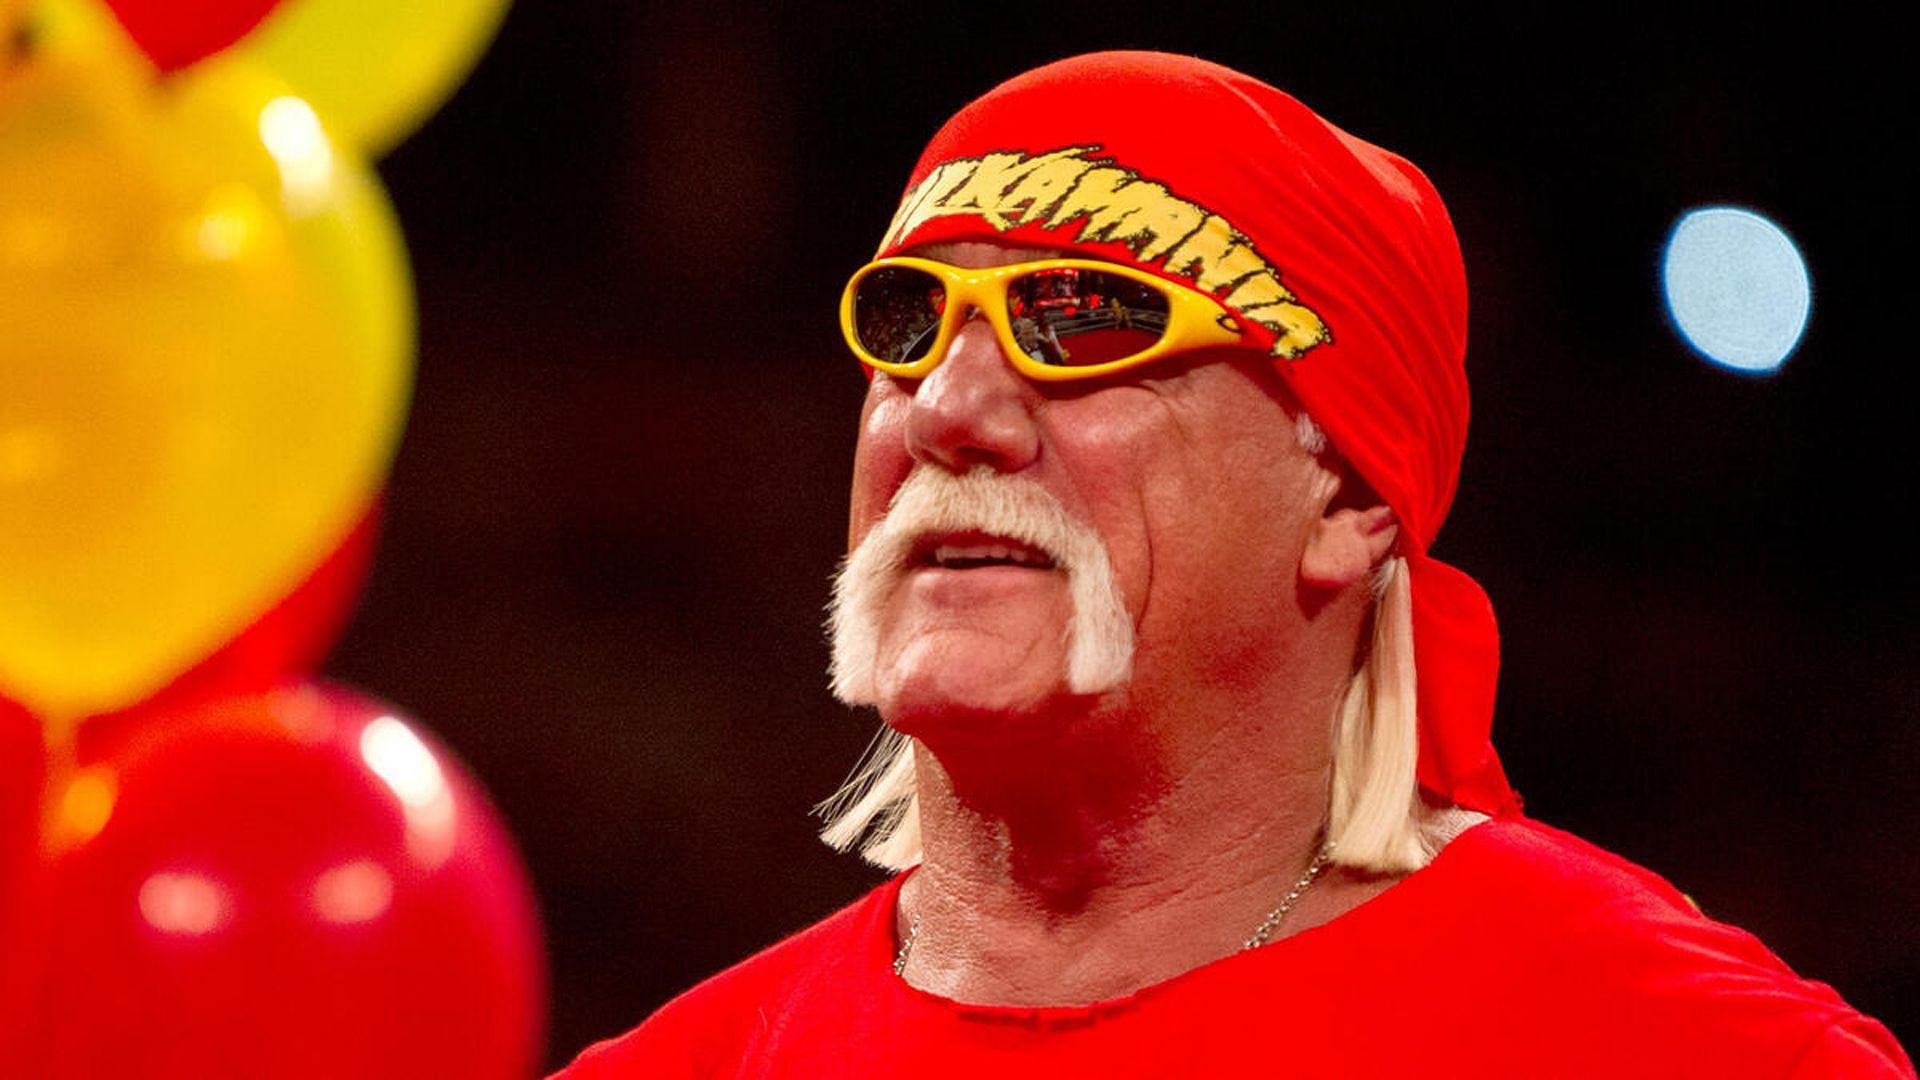 Hulk Hogan is a Hall of Famer (image credit: WWE.com)